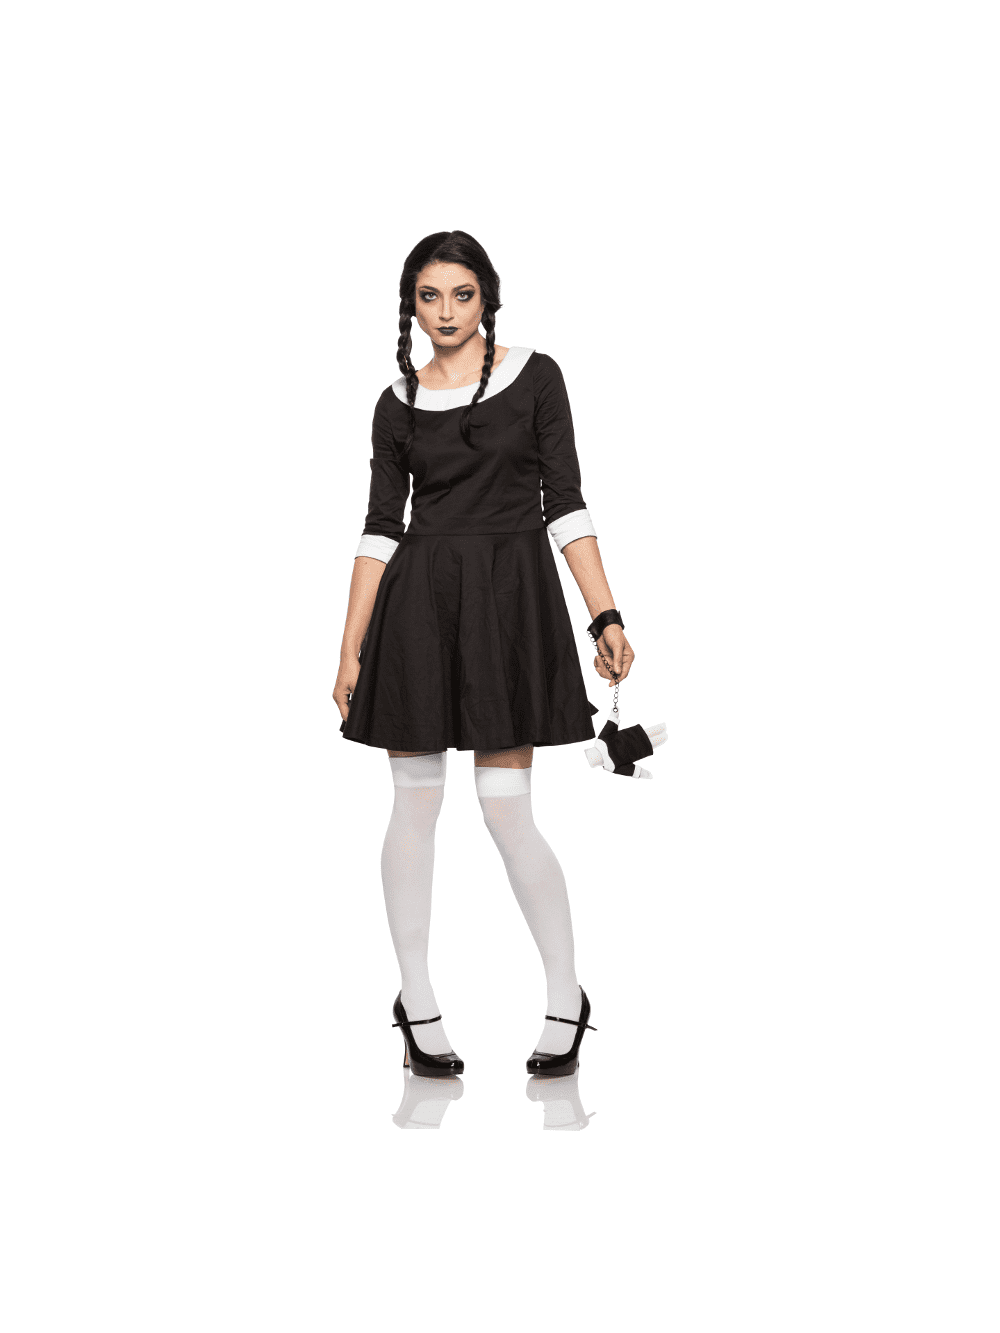 Girls Gothic Girl Wednesday Addams Costume